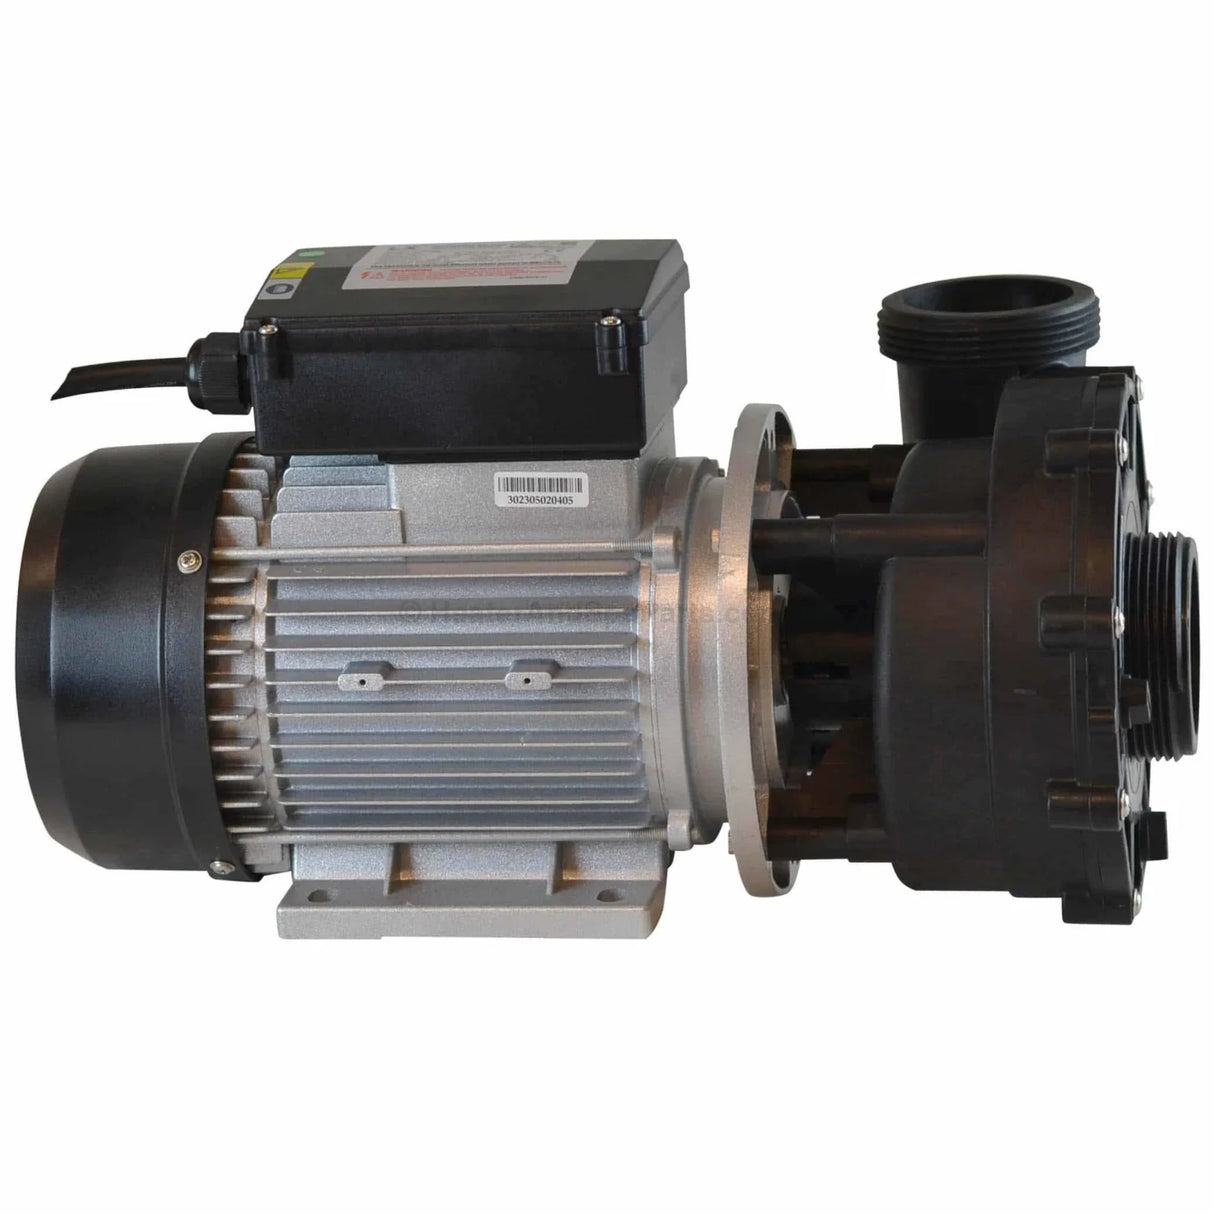 Universal Spa Jet Pump - Single-speed - LP300 3.0HP - LX Whirlpool - Heater and Spa Parts